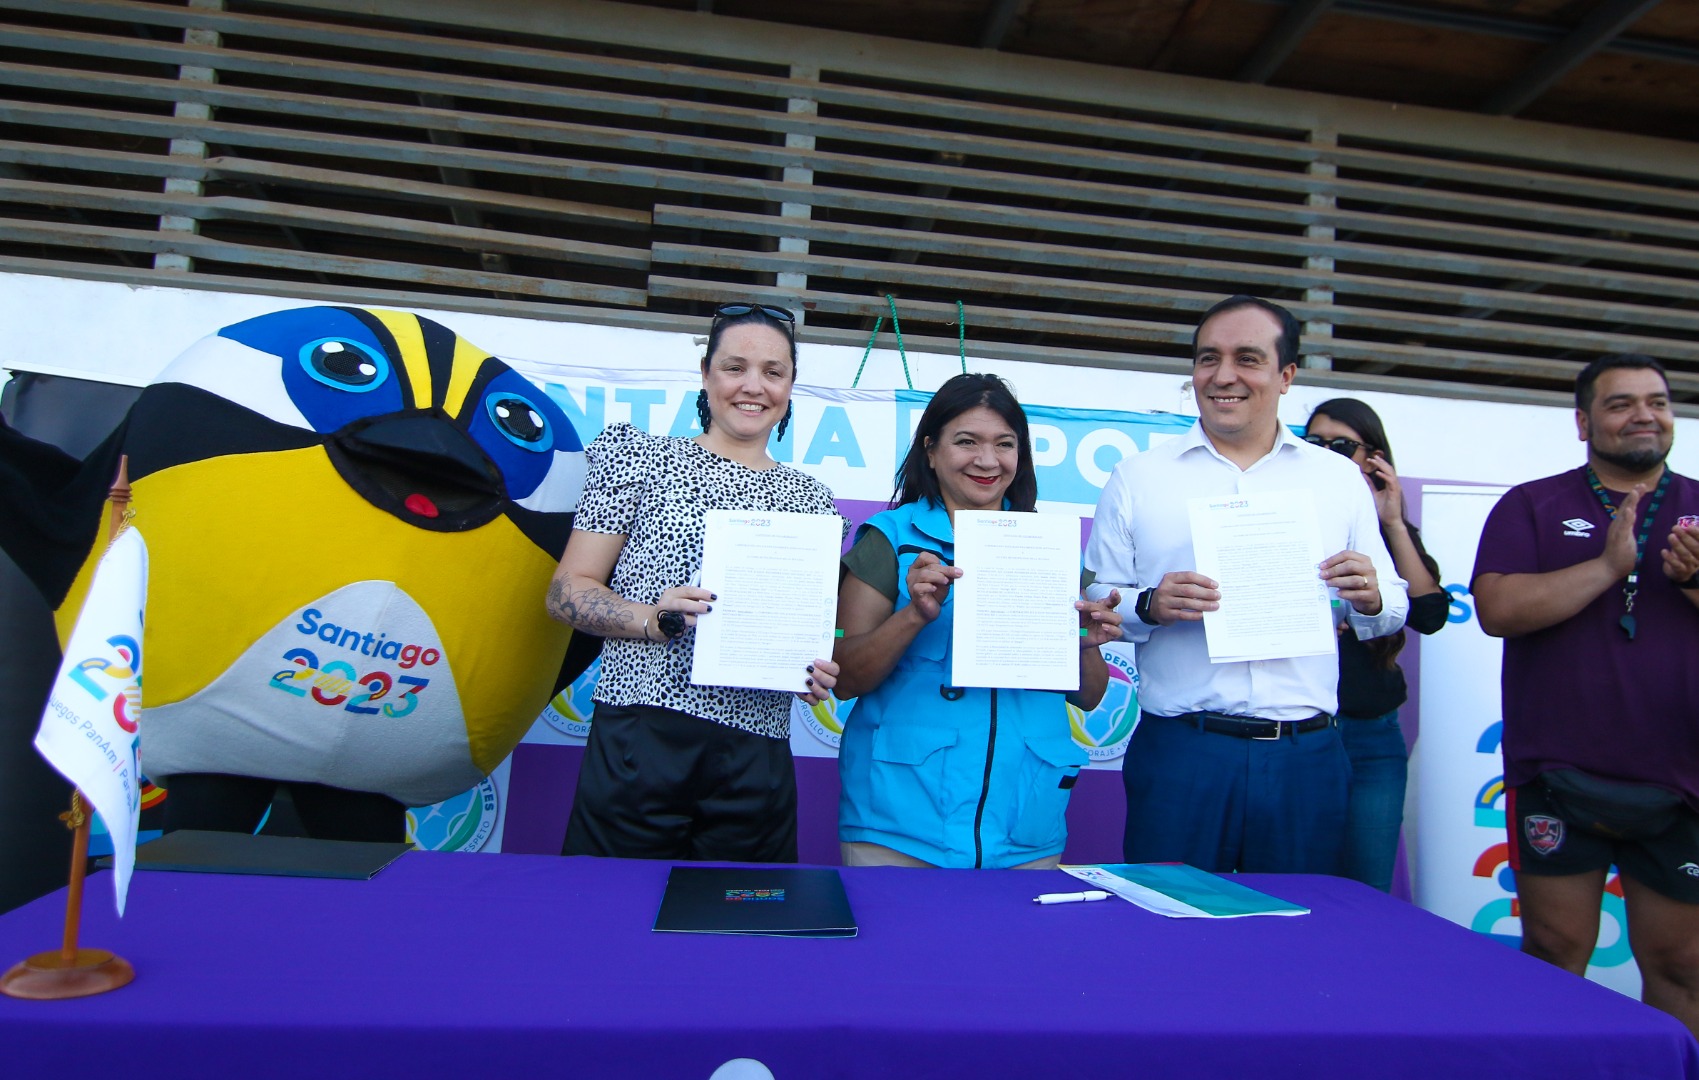 La Pintana signs an agreement with Santiago 2023